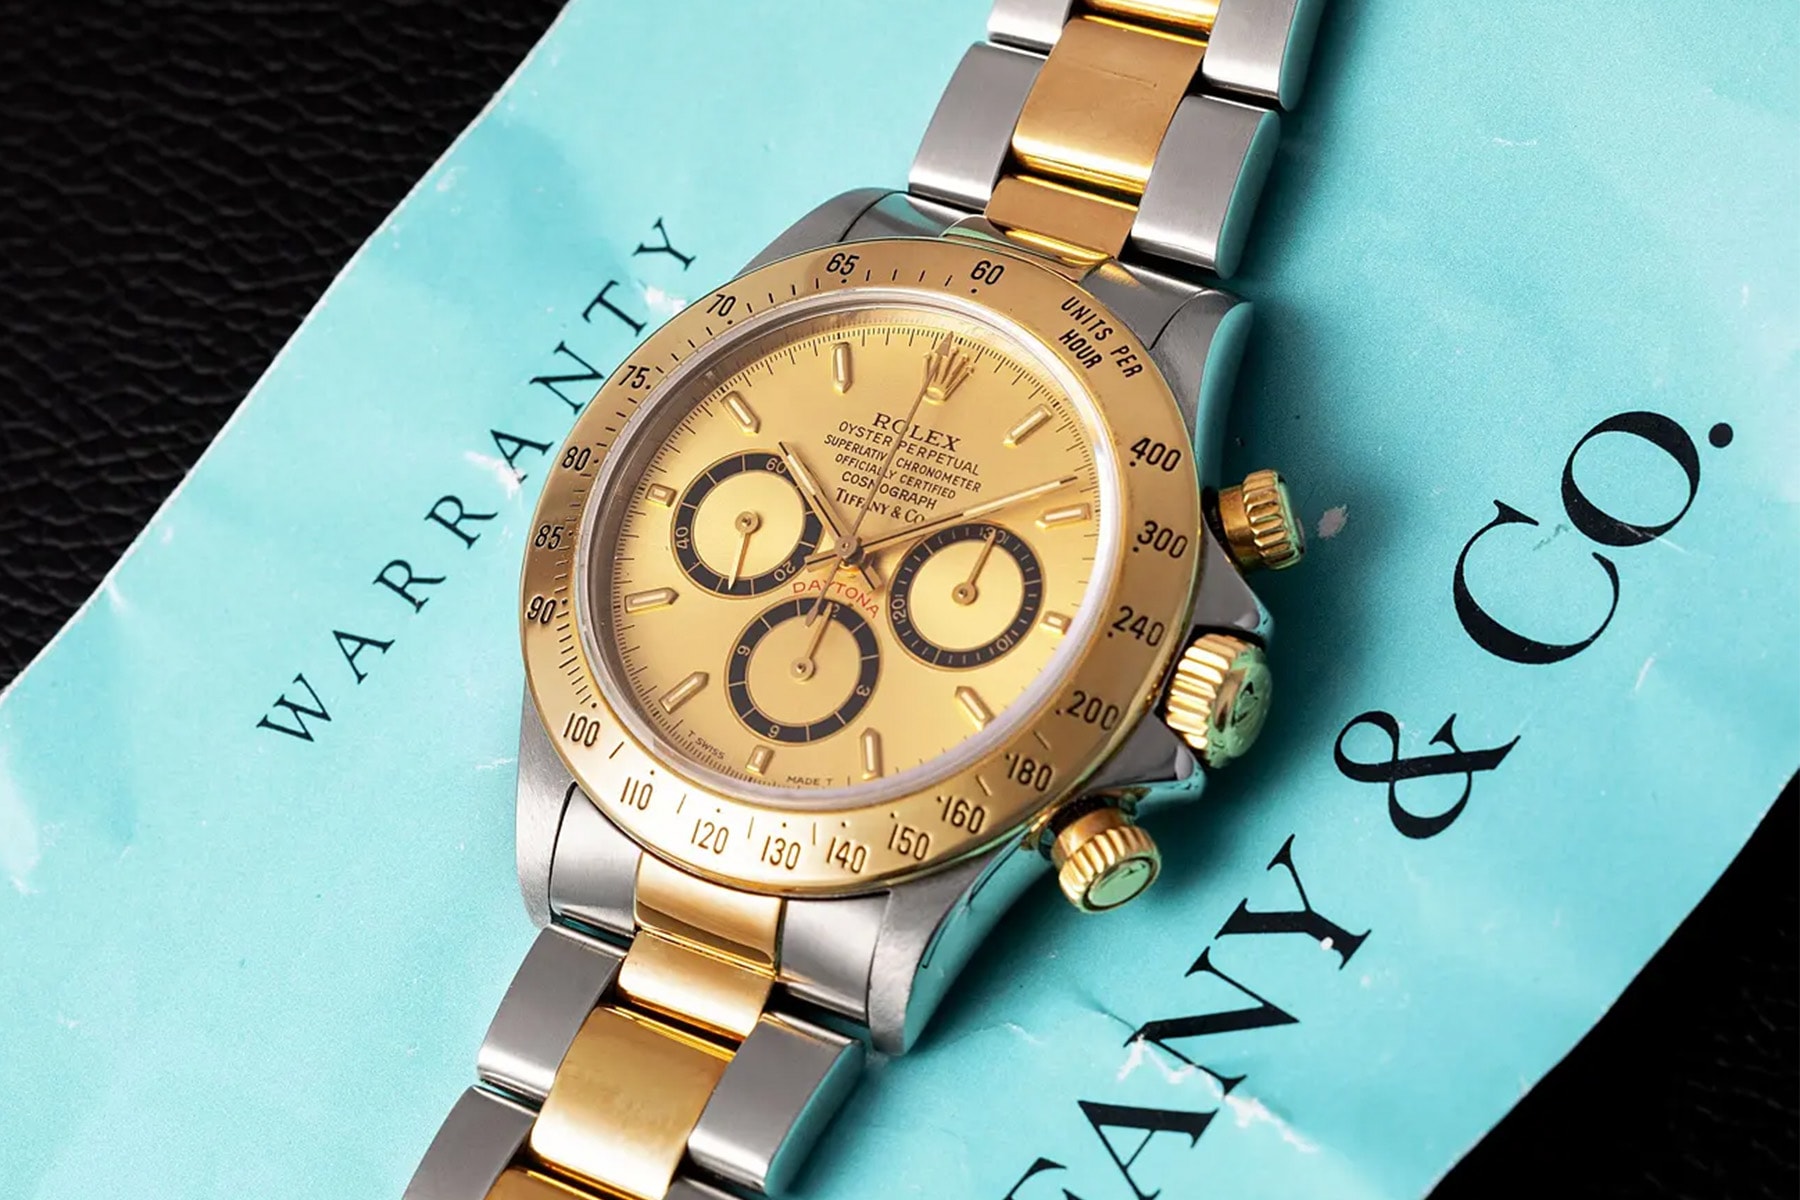 極罕有 Tiffany & Co. x Rolex Daytona「Paul Newman」錶款正式拍賣